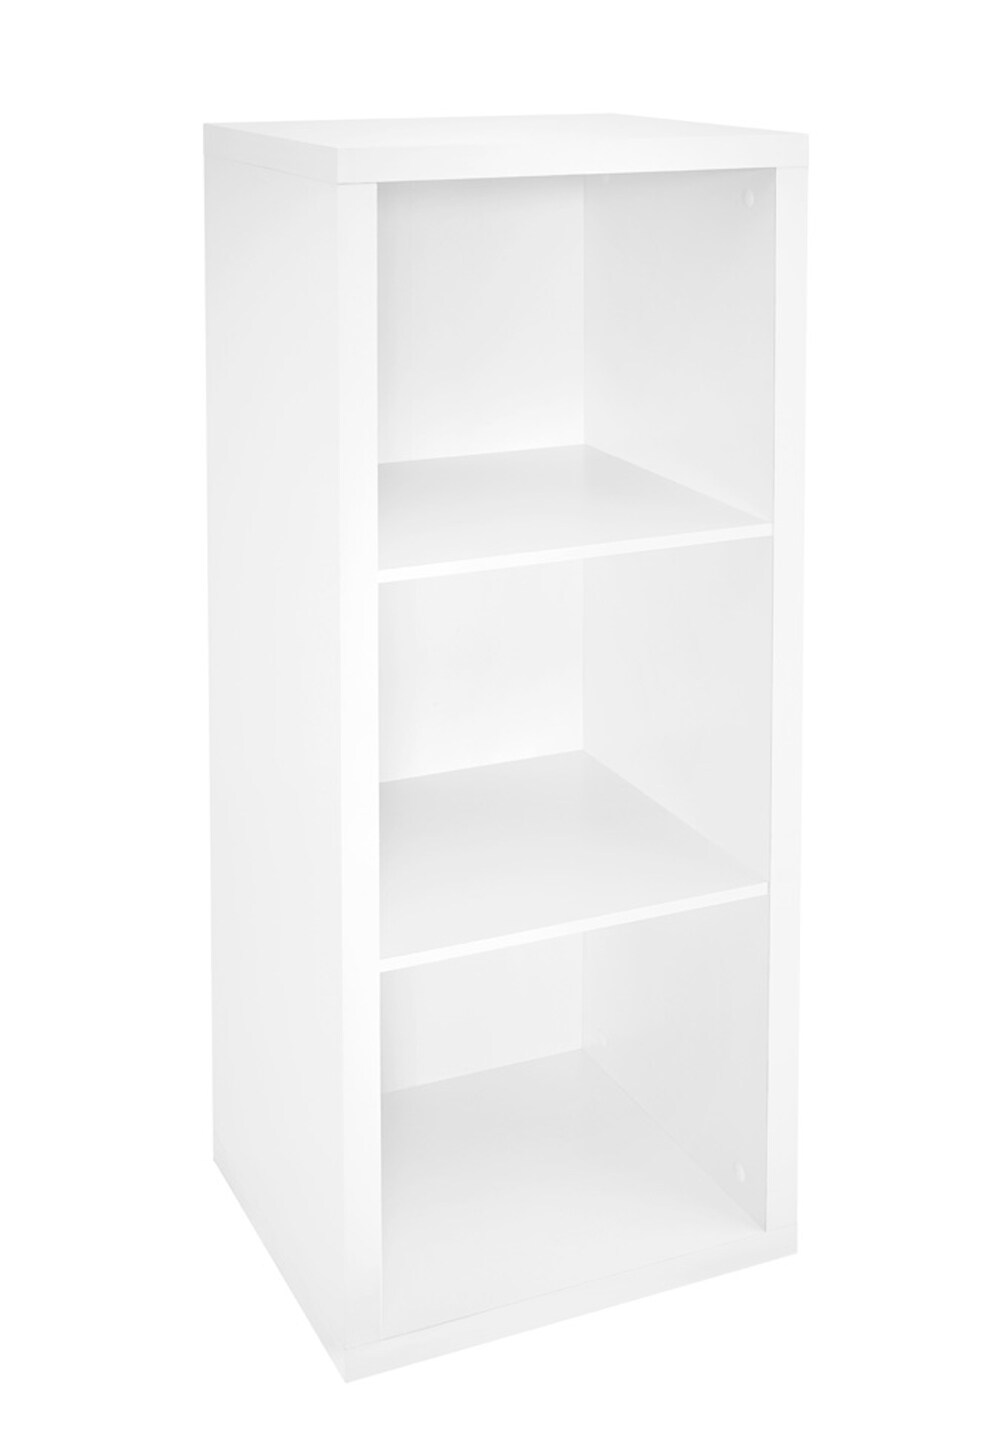 Details about   White Wooden 3 Cube Bookcase Storage Organizer Shelving Bookshelf Decor Closet 